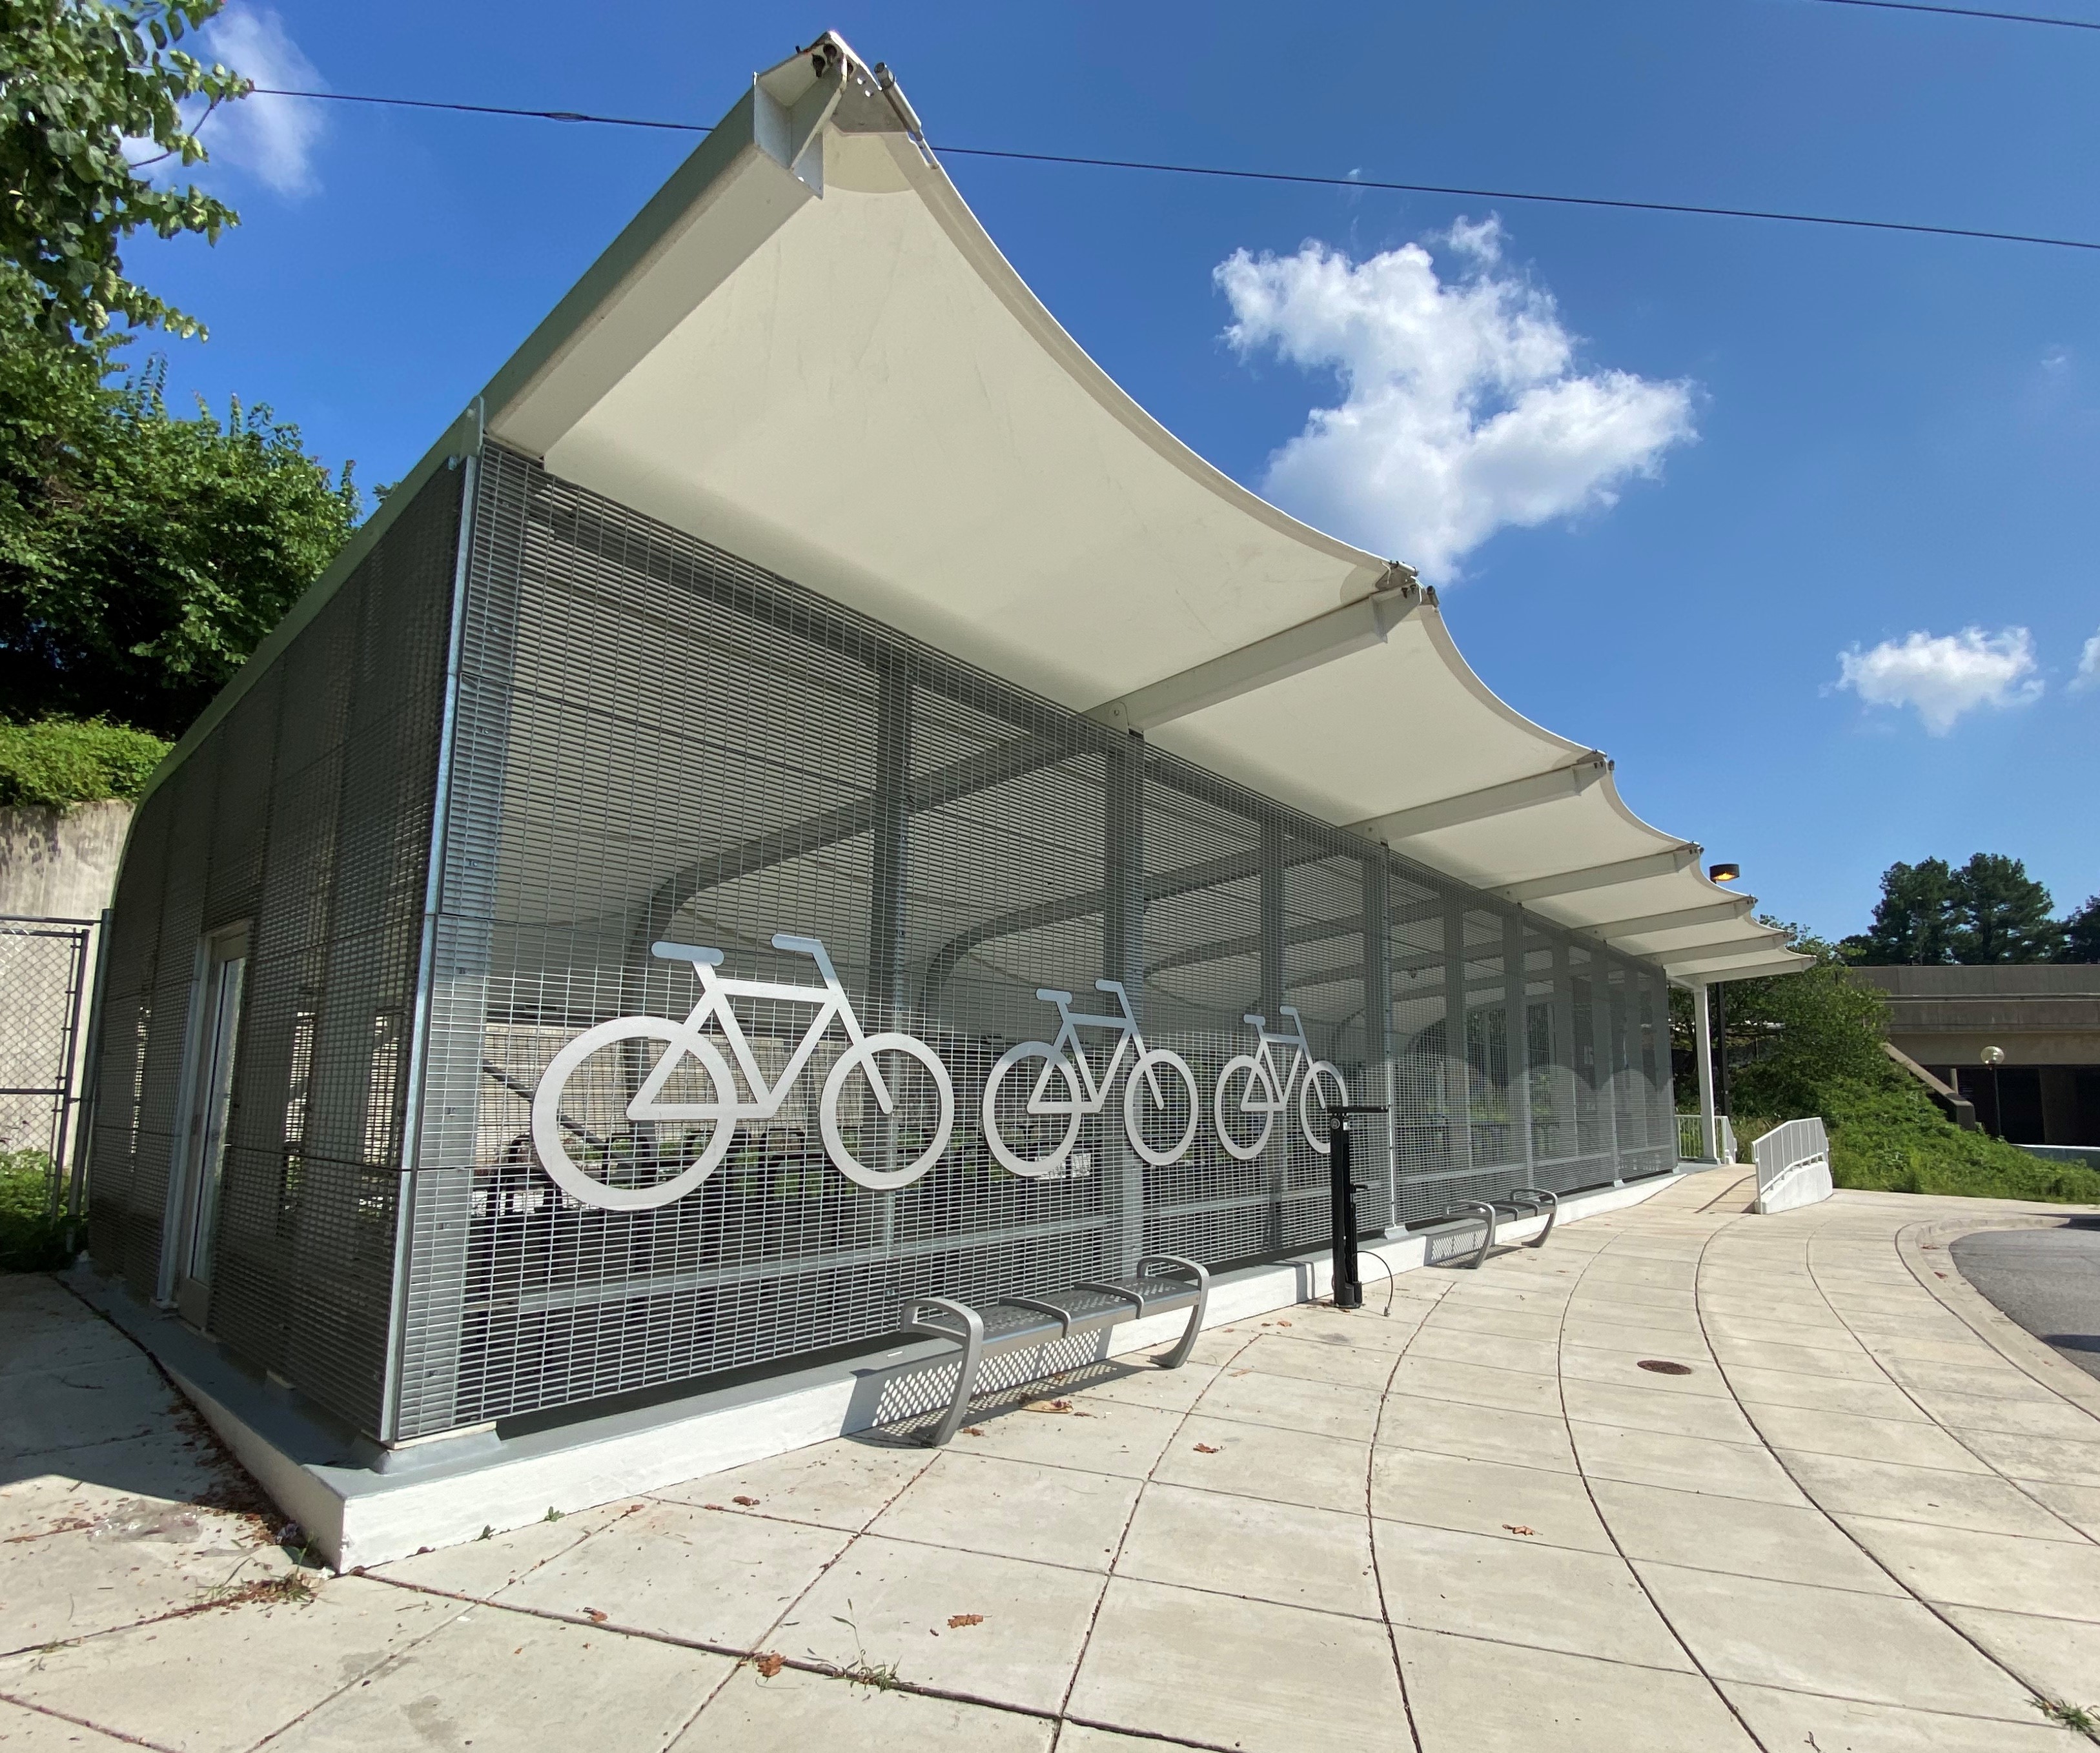 Bike & Ride facility at College Park